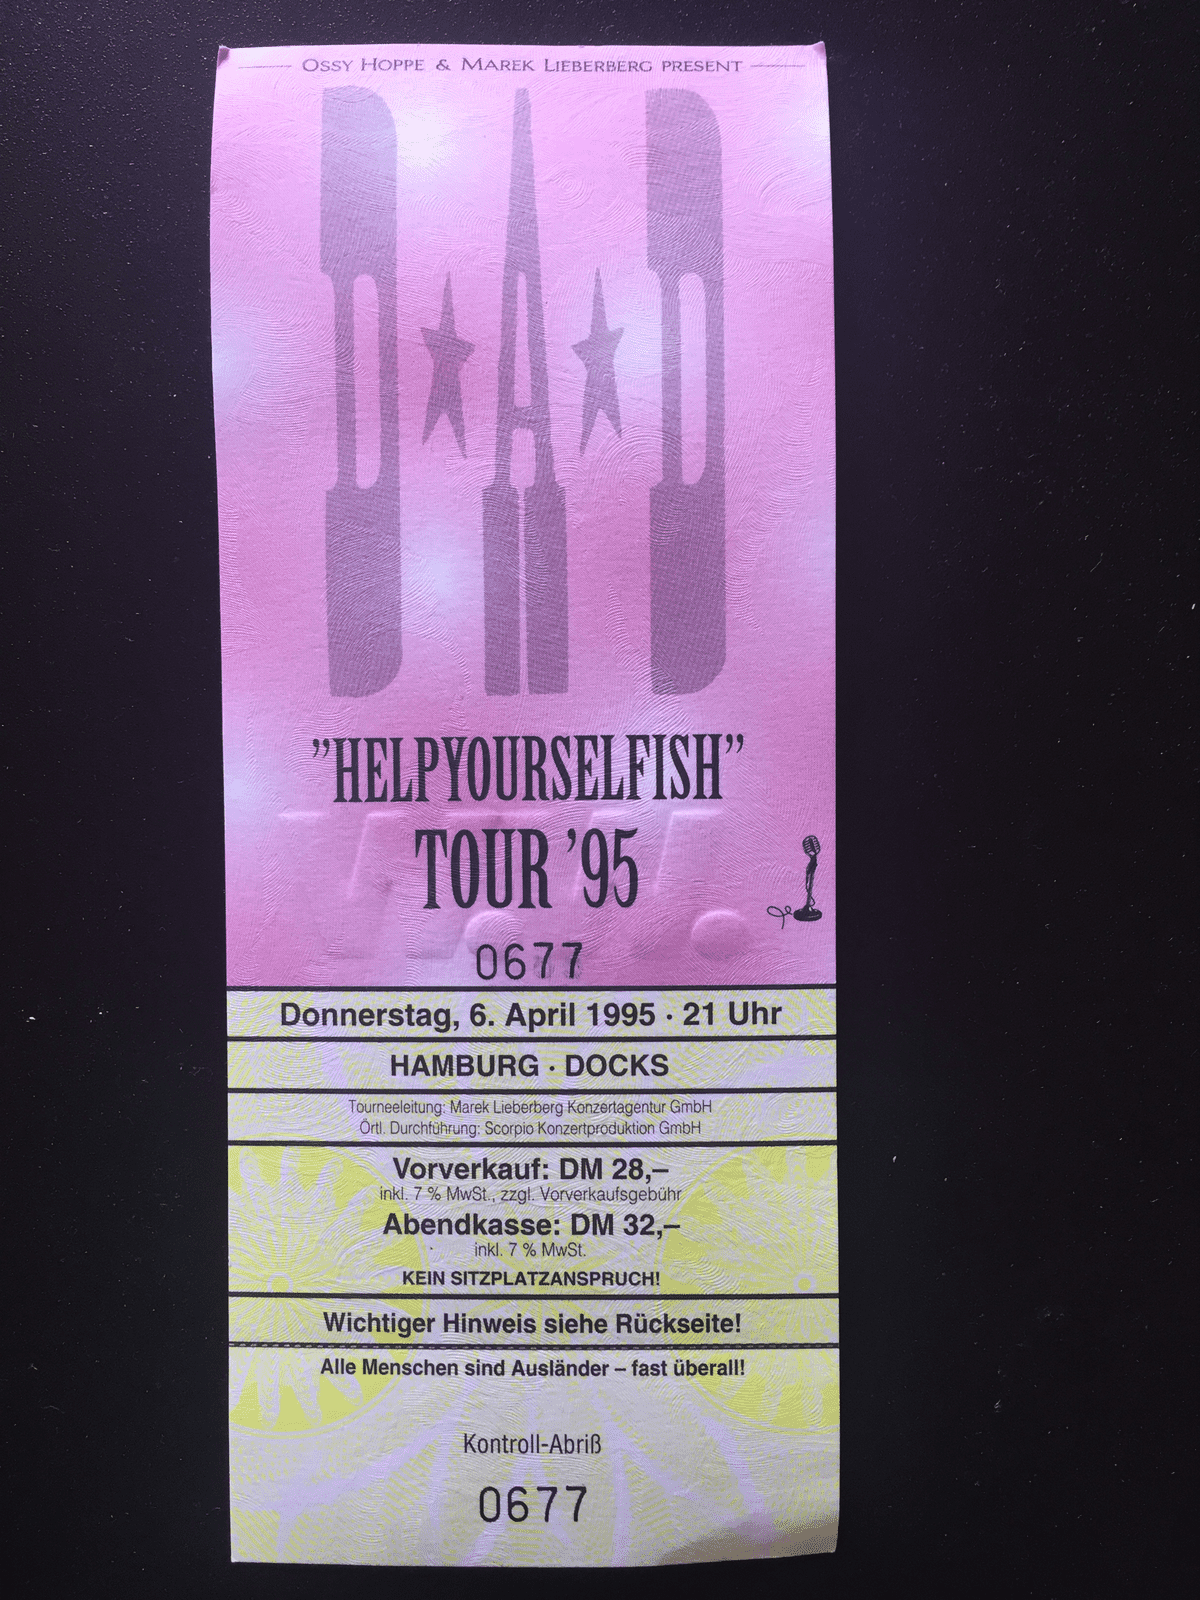 TICKET FOR HAMBURG DOCKS (DE), APRIL 6, 1995